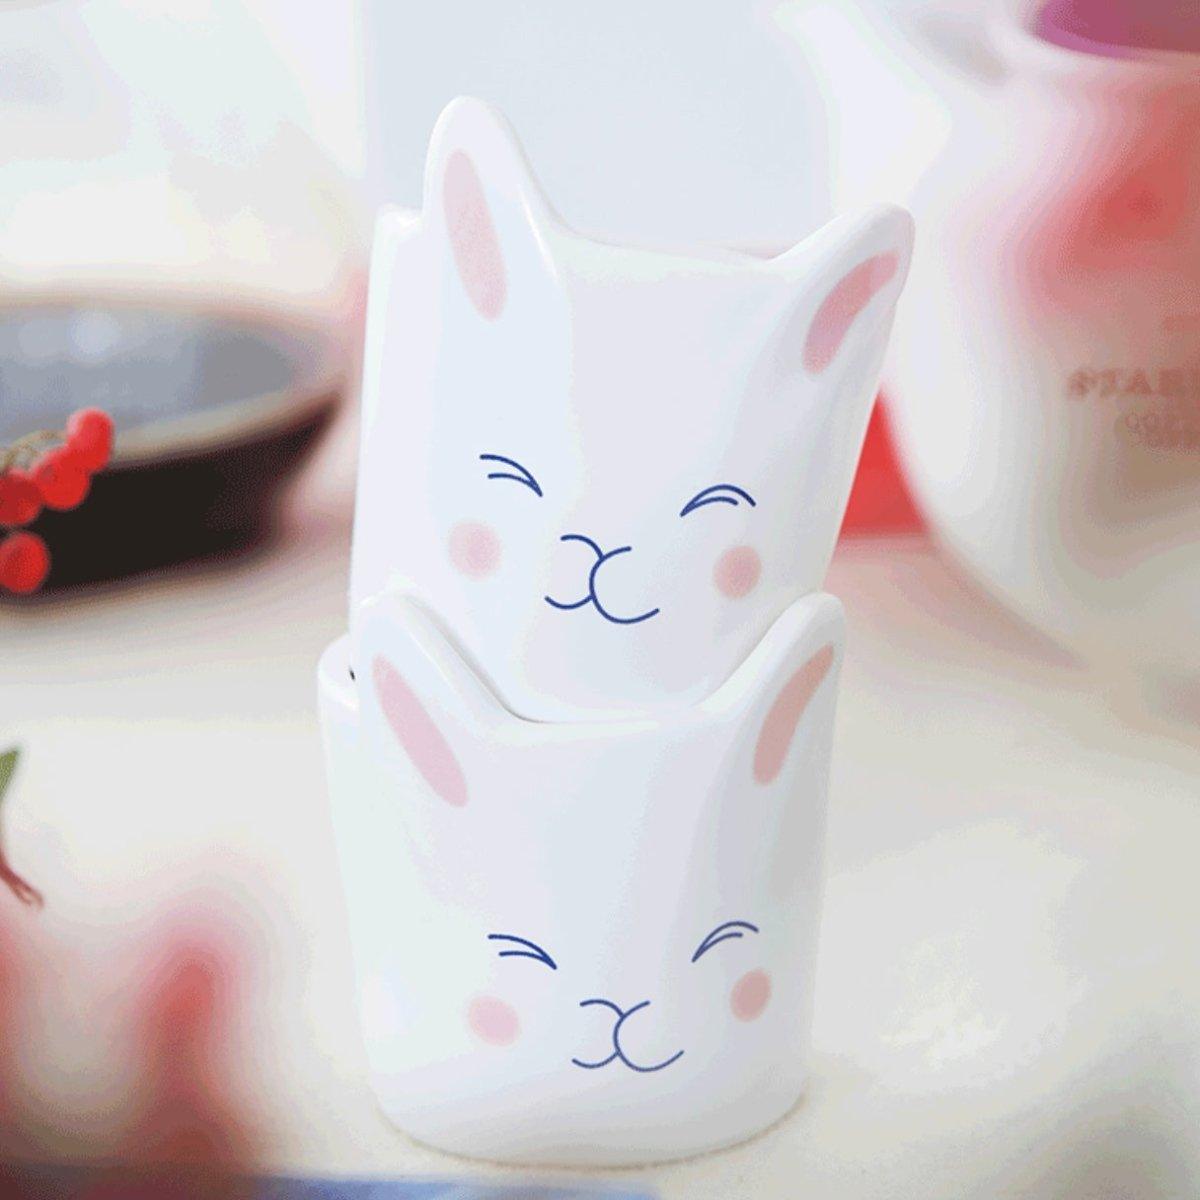 Starbucks Bunny Teapot and Teacups Gift Set with Mini Stand - Ann Ann Starbucks